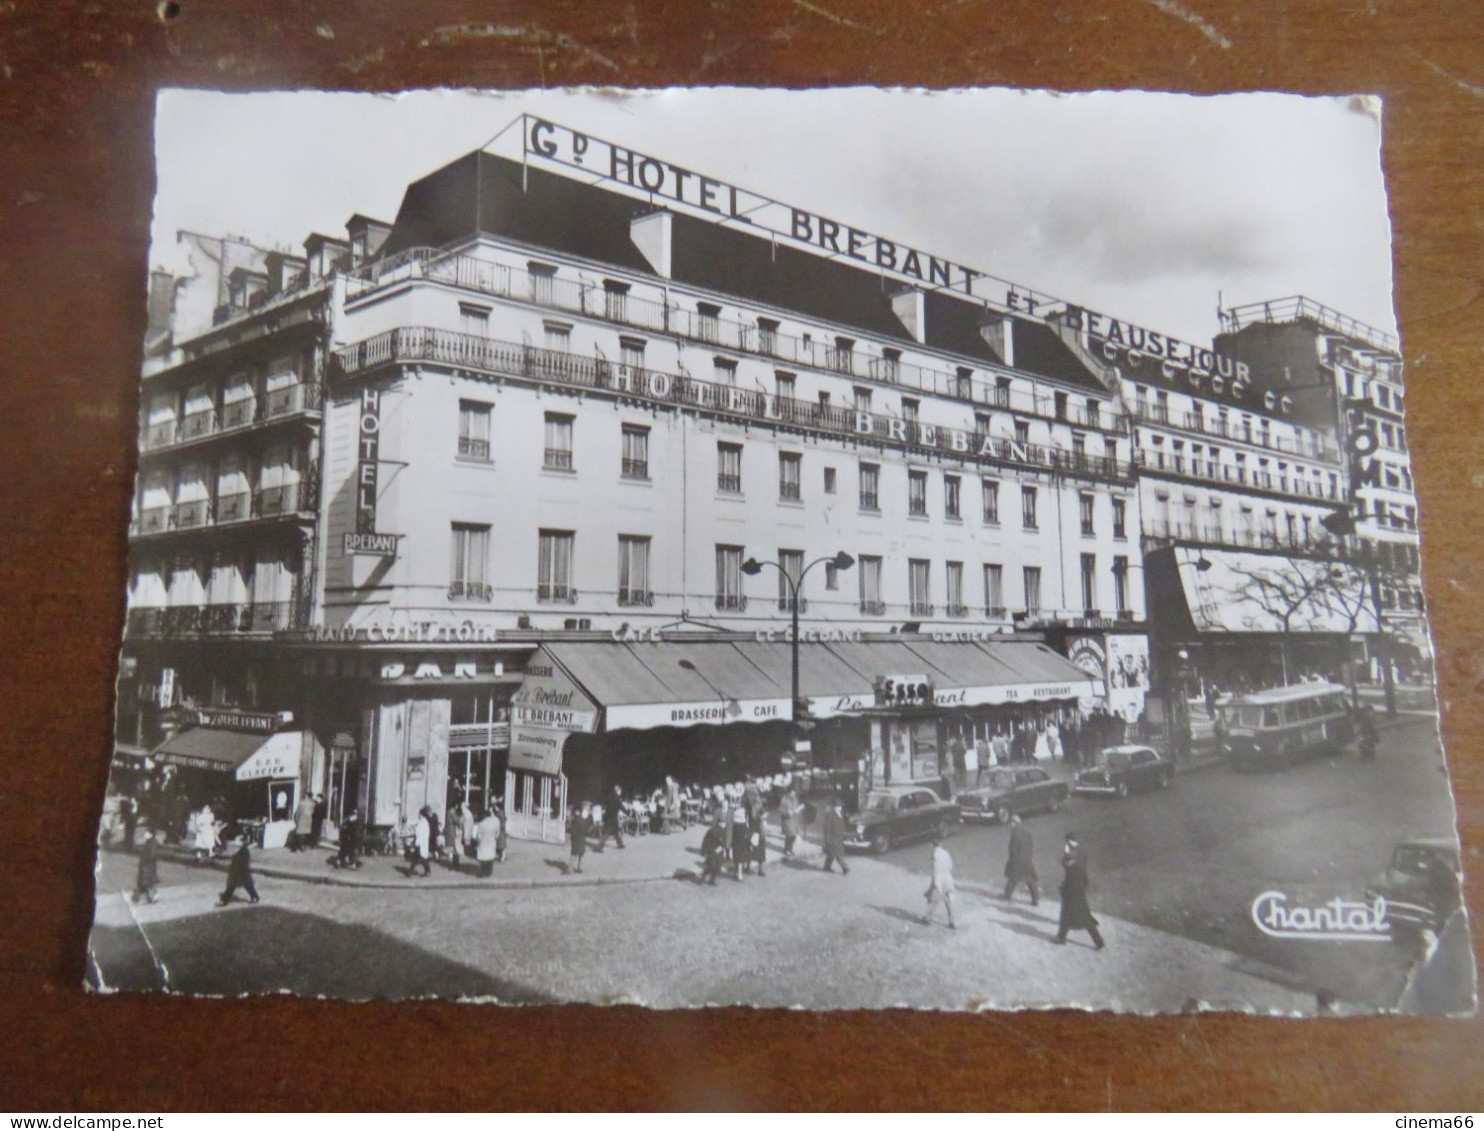 HOTEL BREBANT 32, Boulevard Poissonnière PARIS (9eme) - Hotels & Restaurants